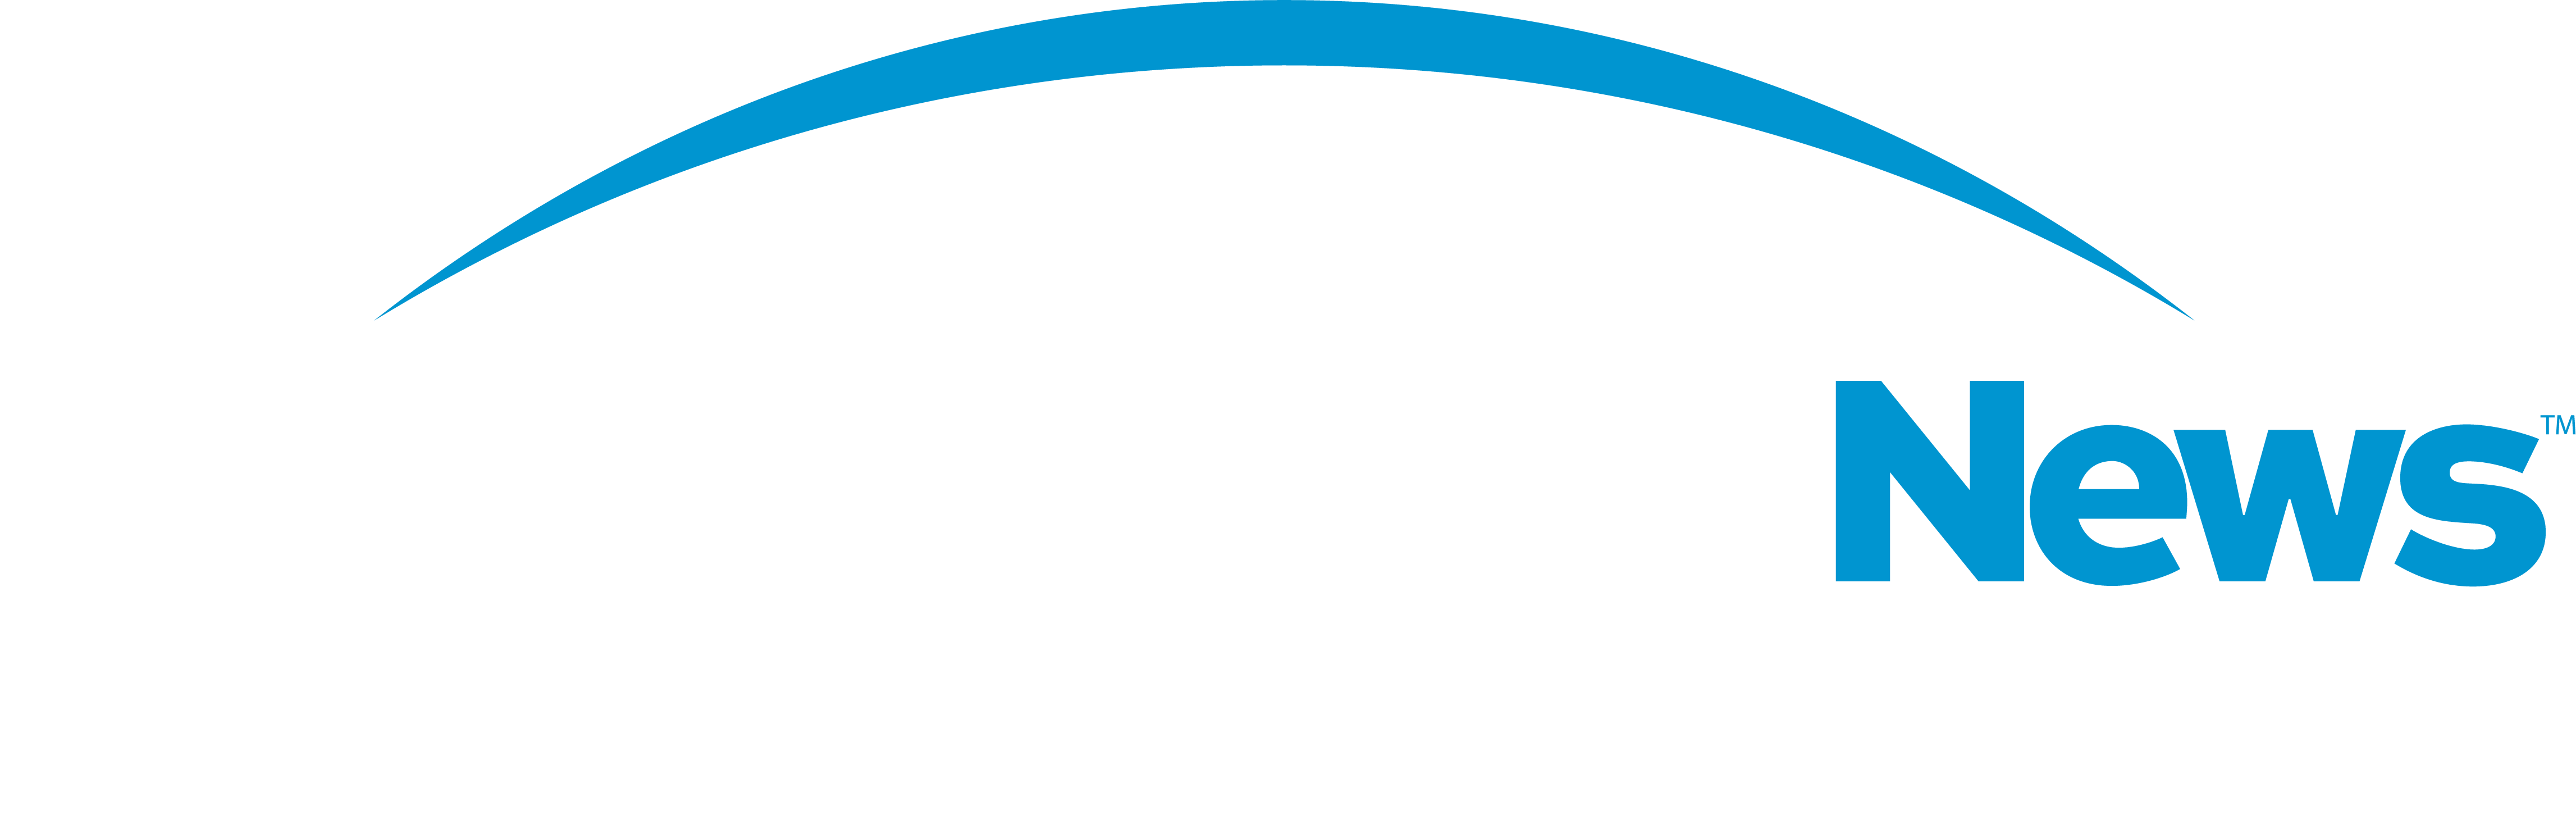 medical world news logo